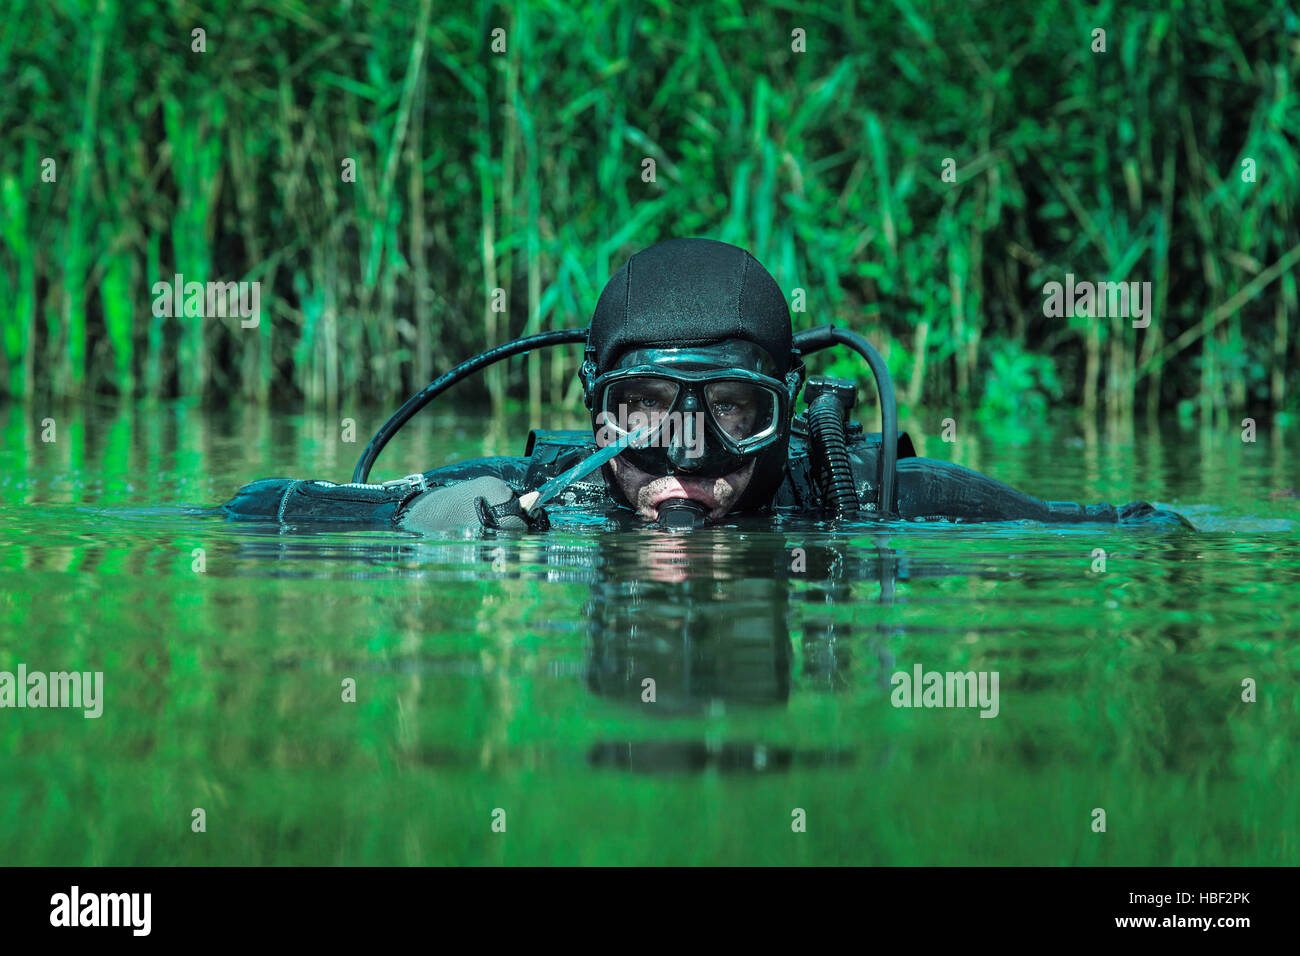 Navy SEAL frogman Stock Photo